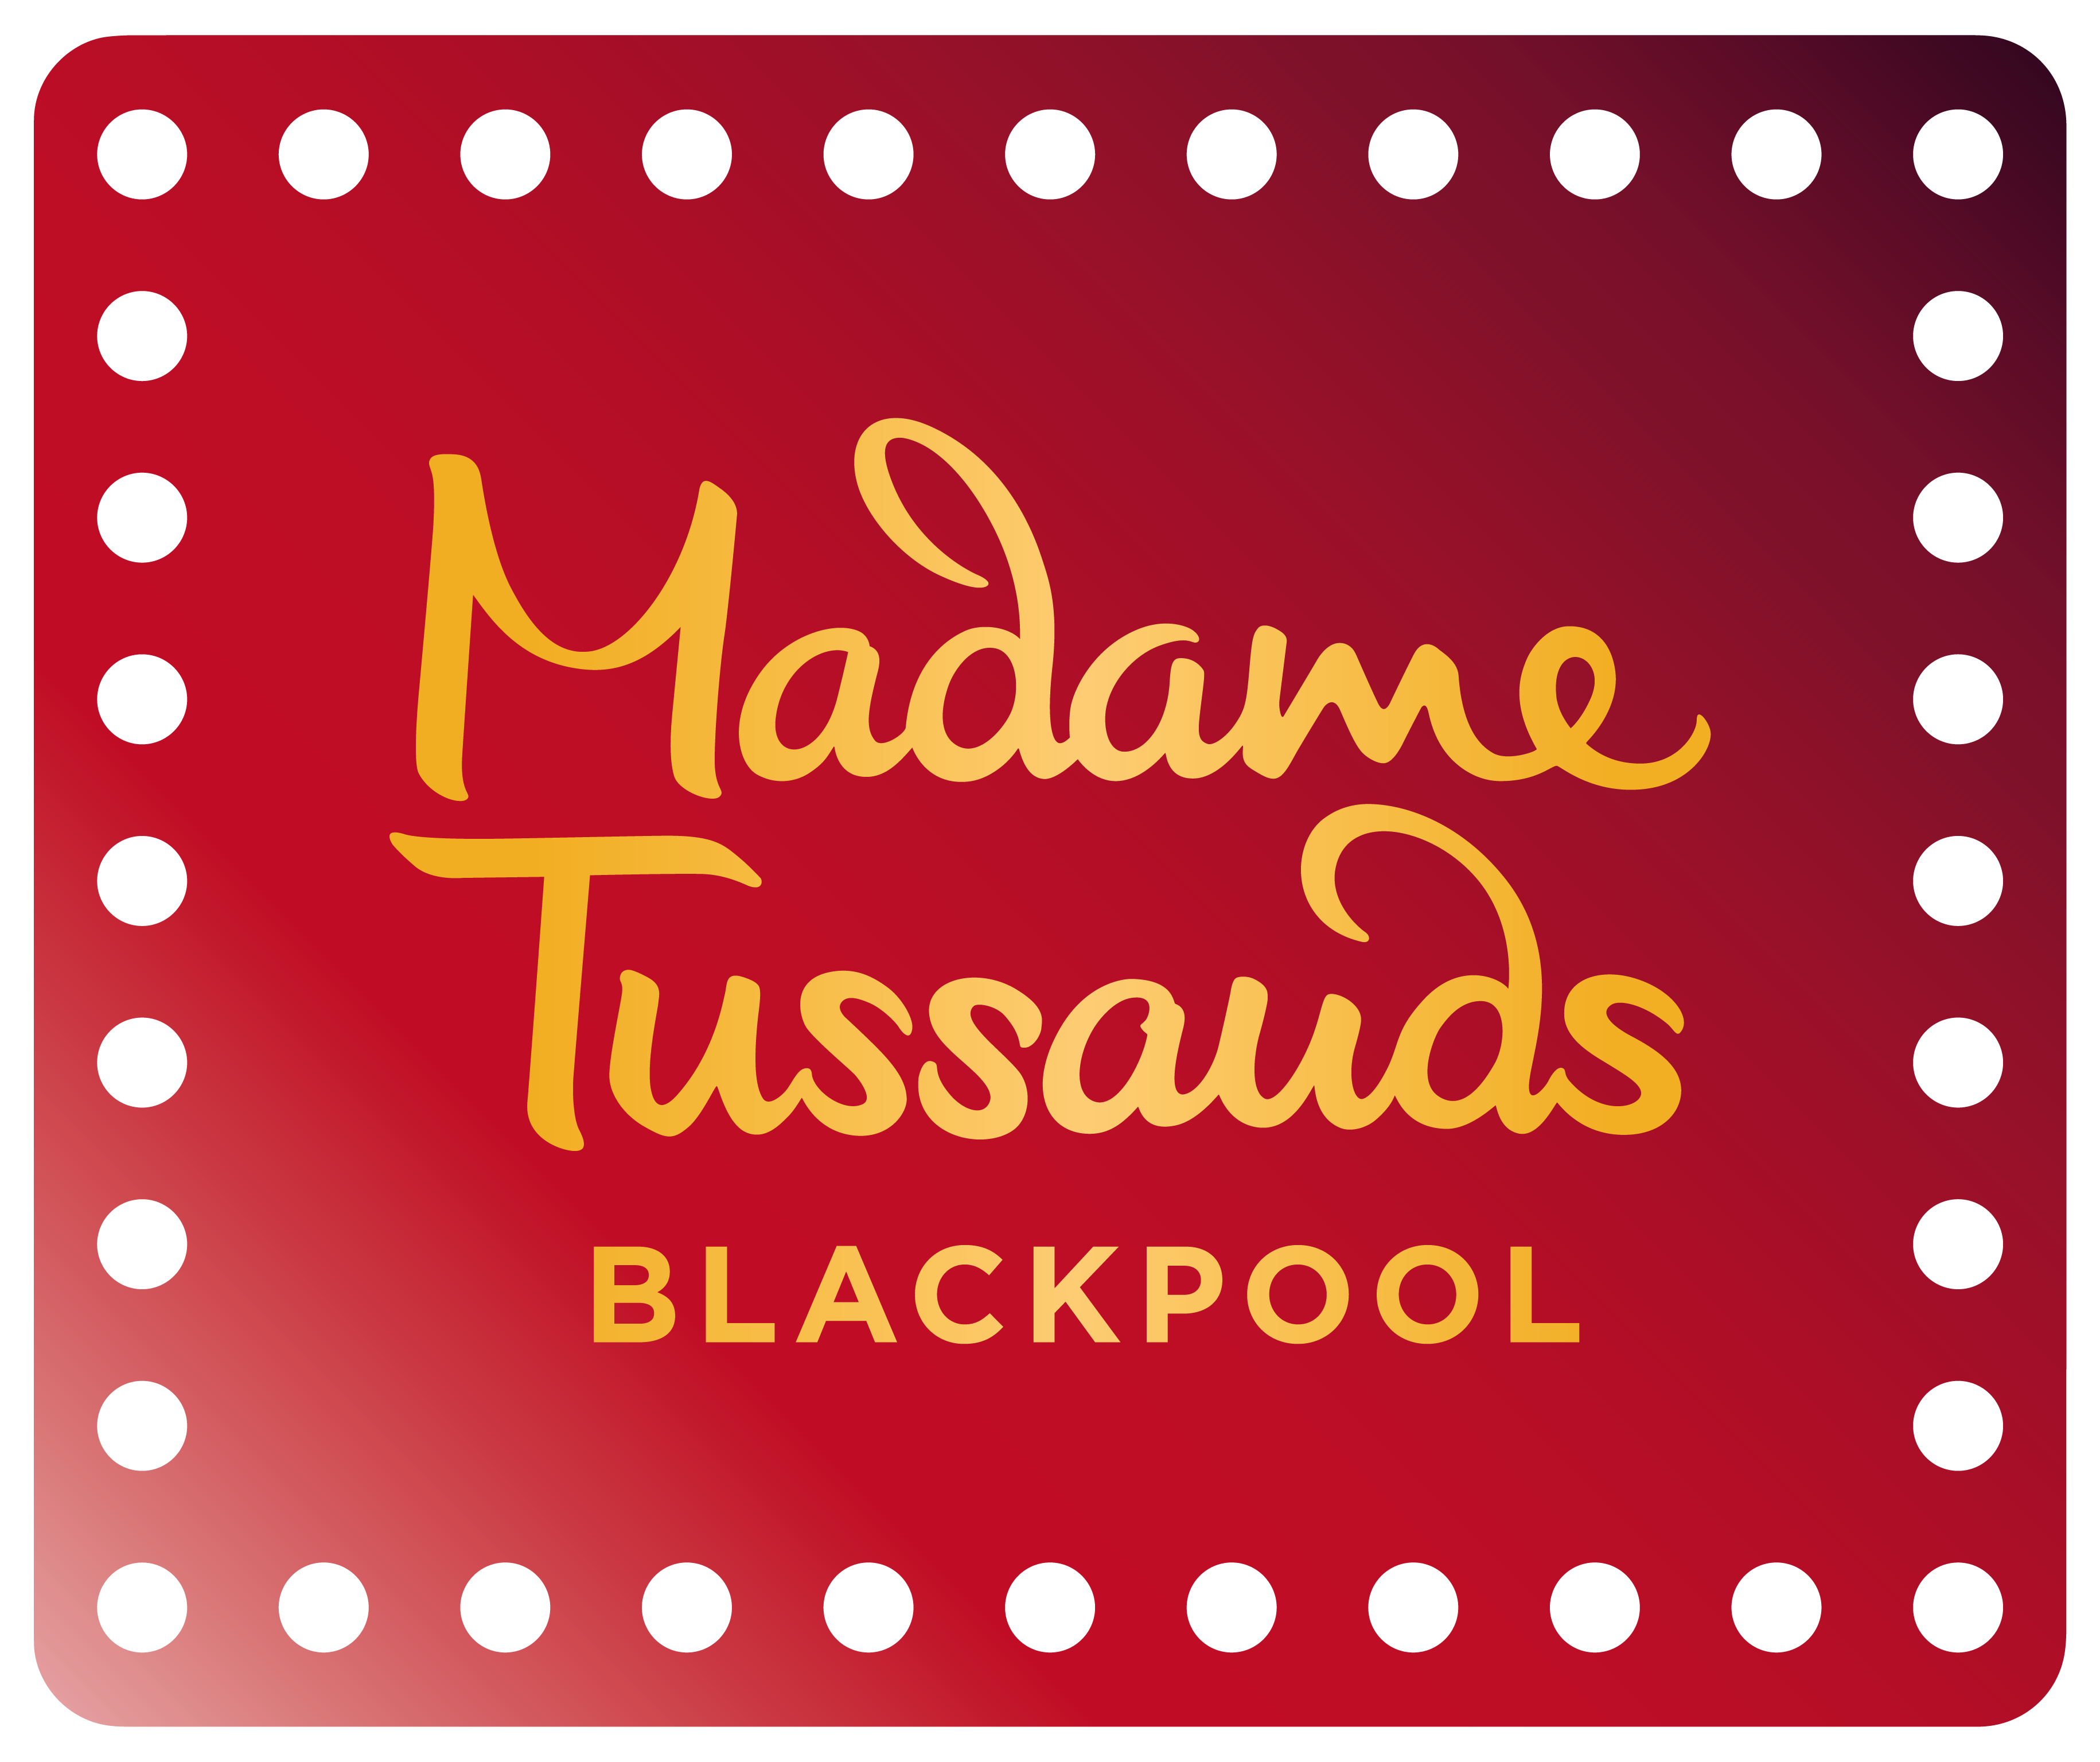 Madame Tussauds Blackpool logo